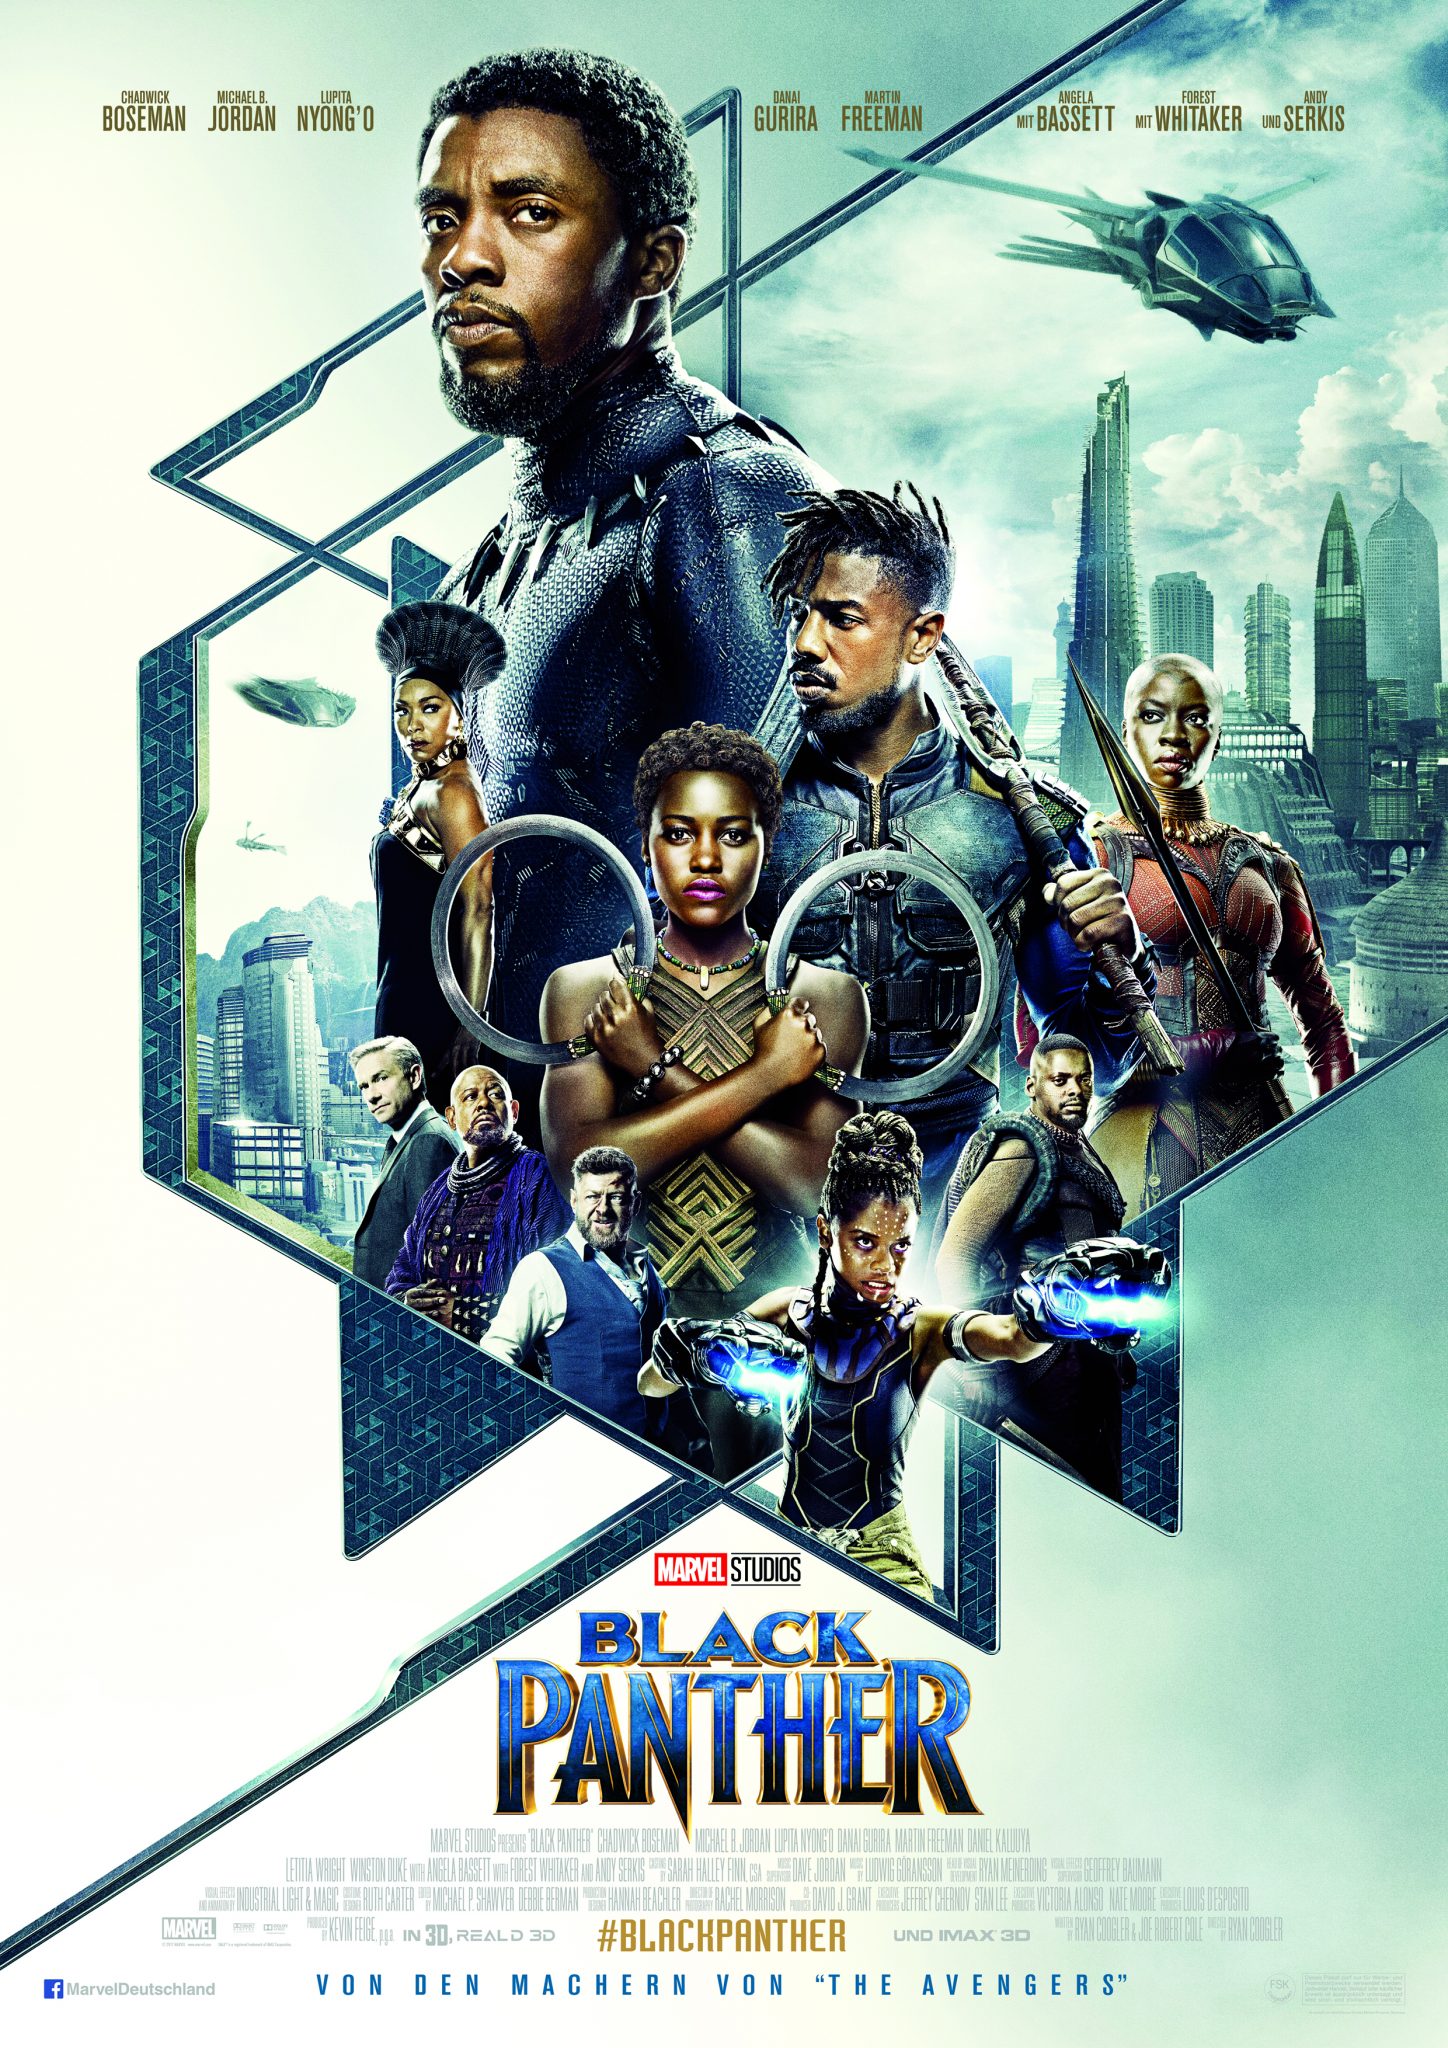 Plakat von Black Panther ©Marvel Studios 2018